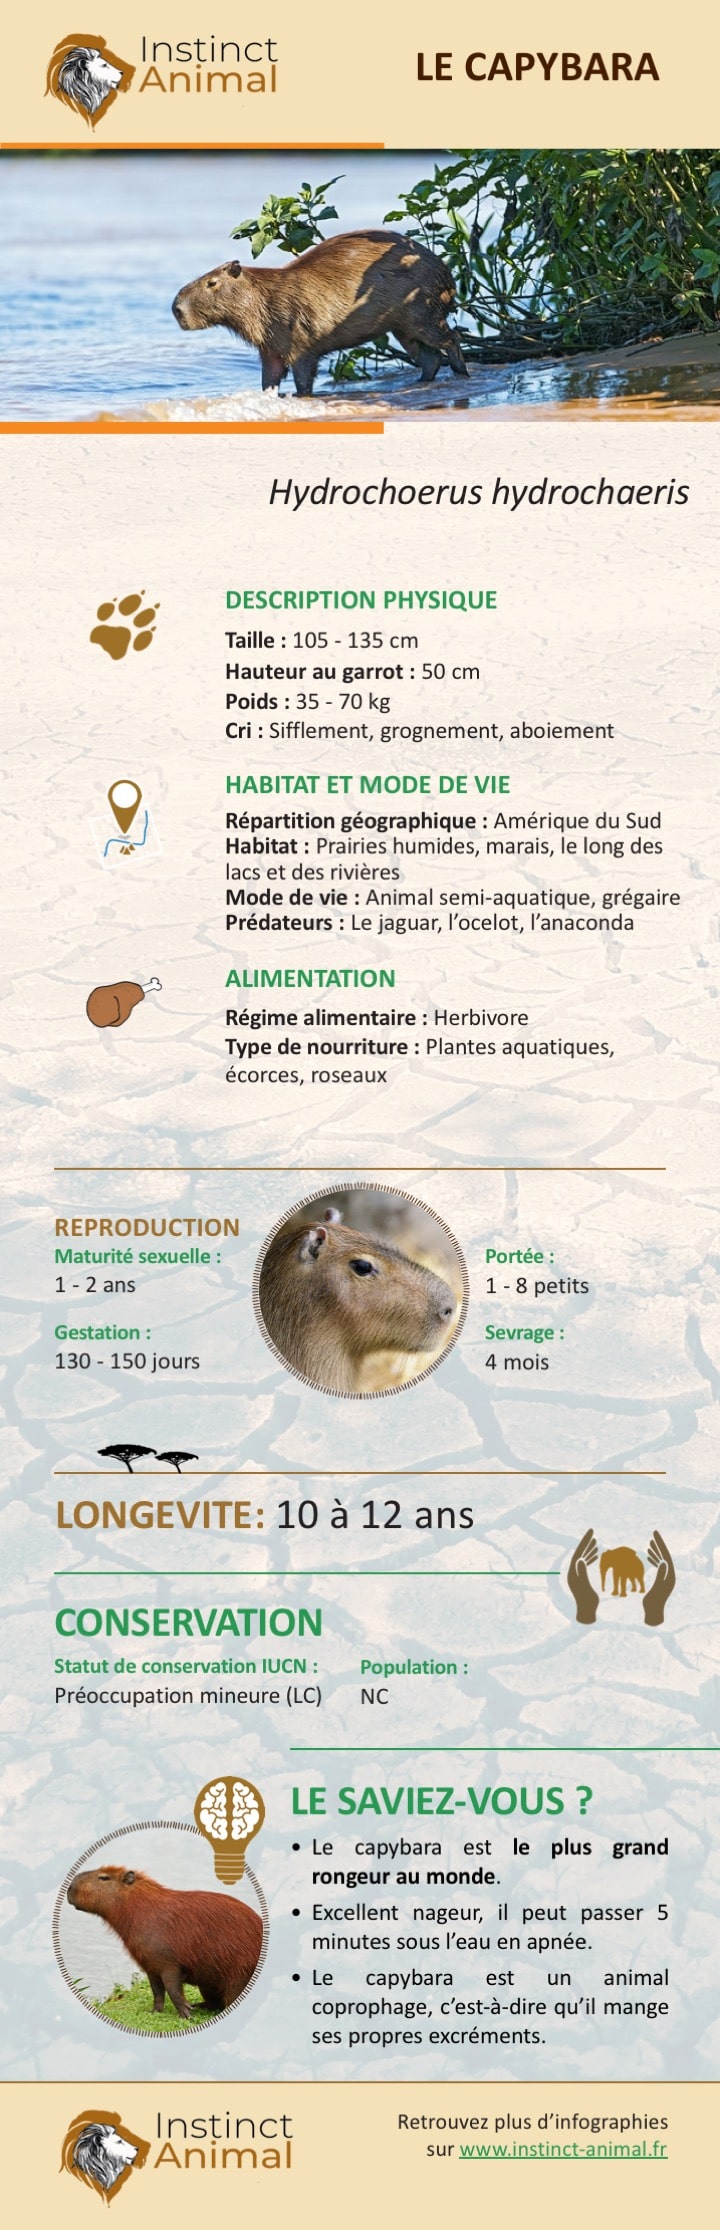 Description du capybara - Infographie - Instinct Animal